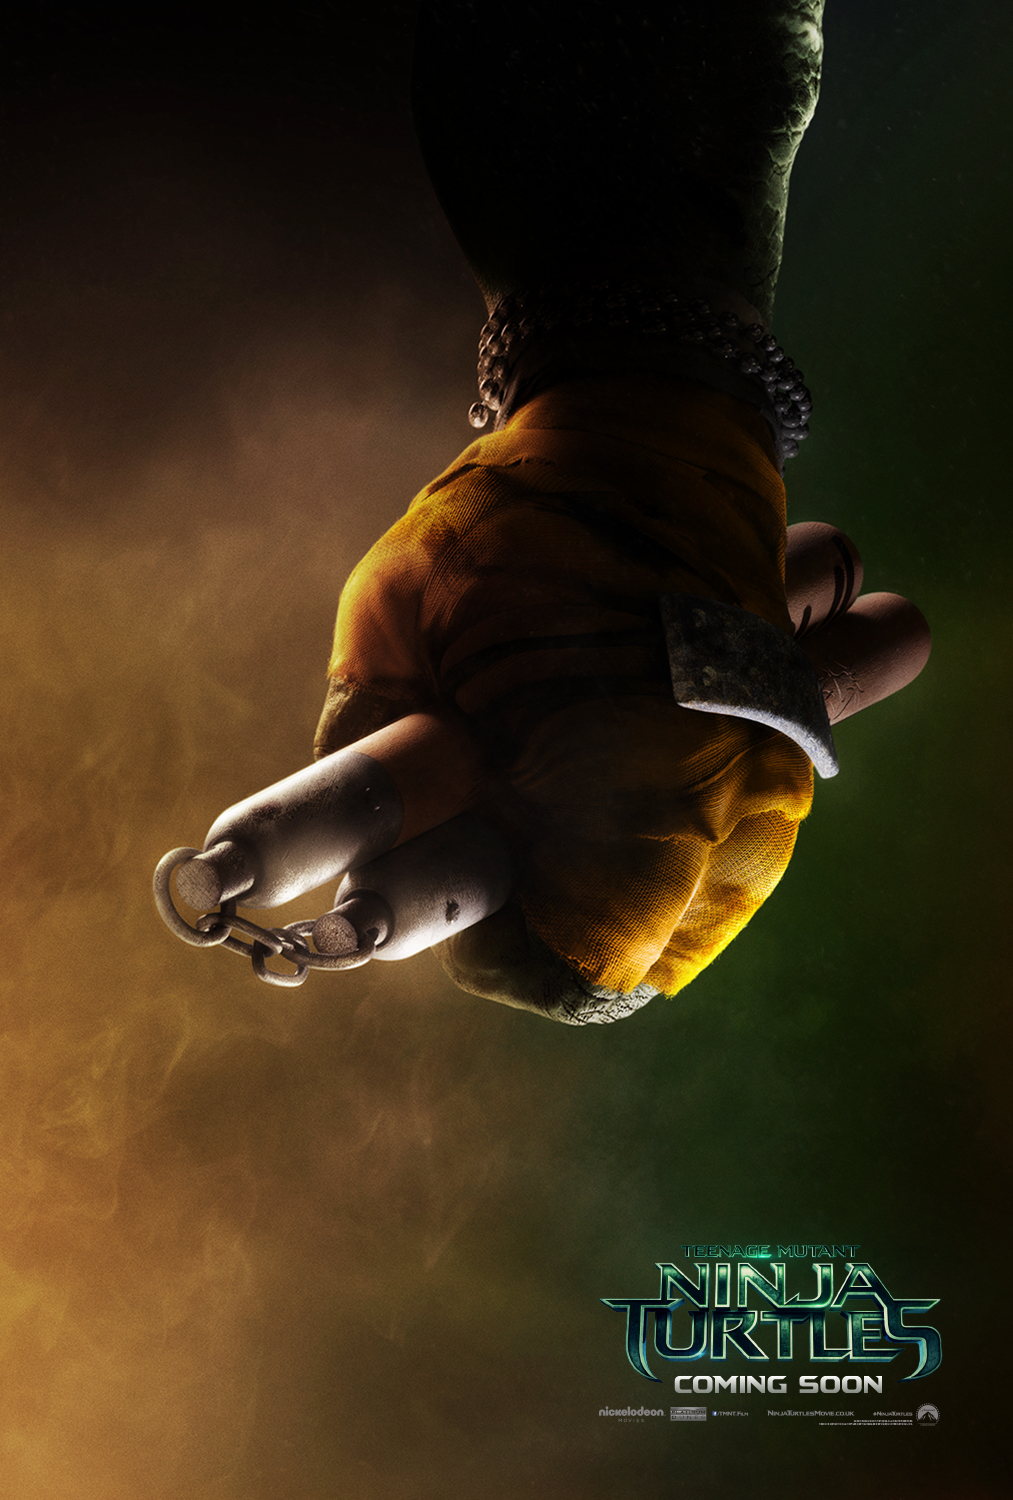 Teenage Mutant Ninja Turtles Teaser poster – Michelangelo